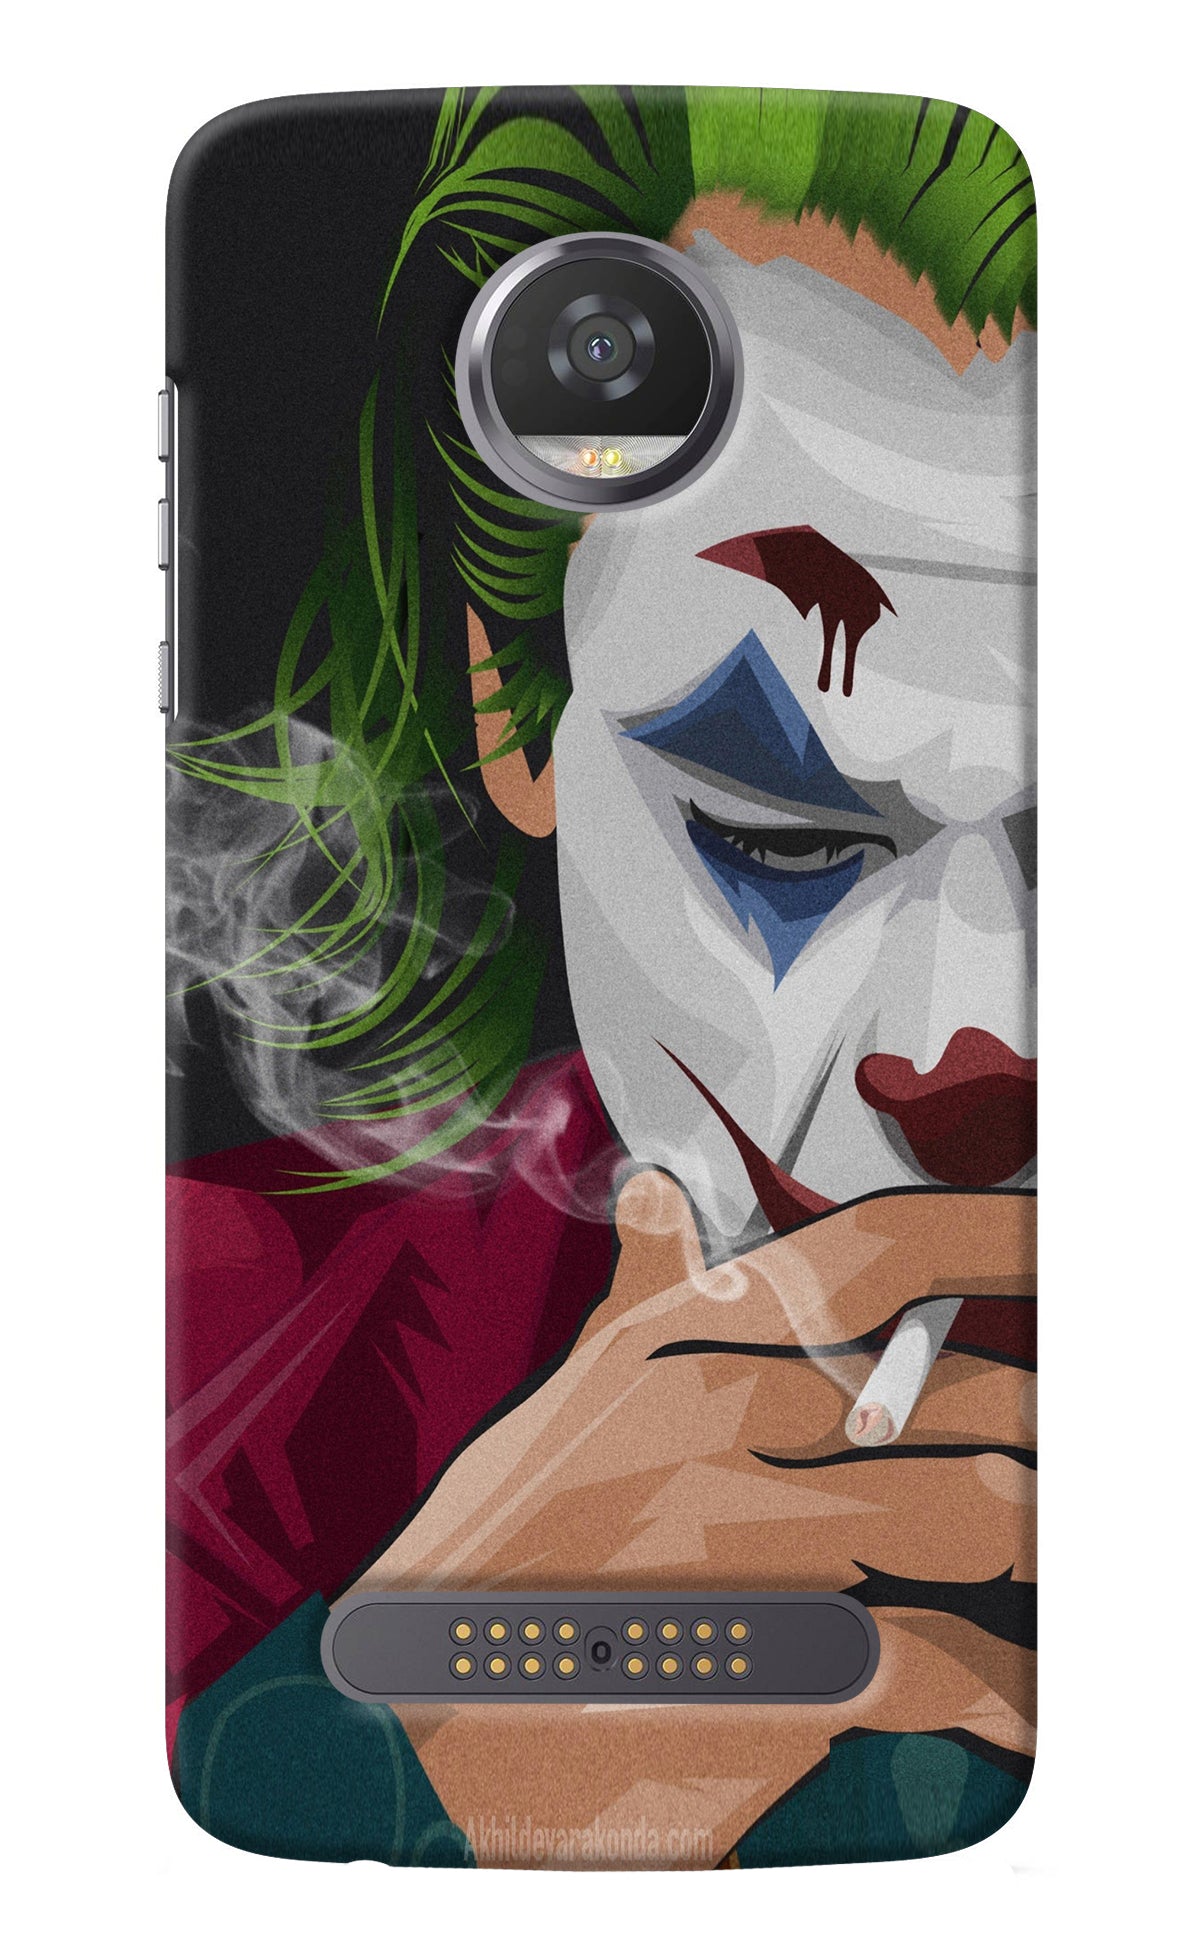 Joker Smoking Moto Z2 Play Back Cover